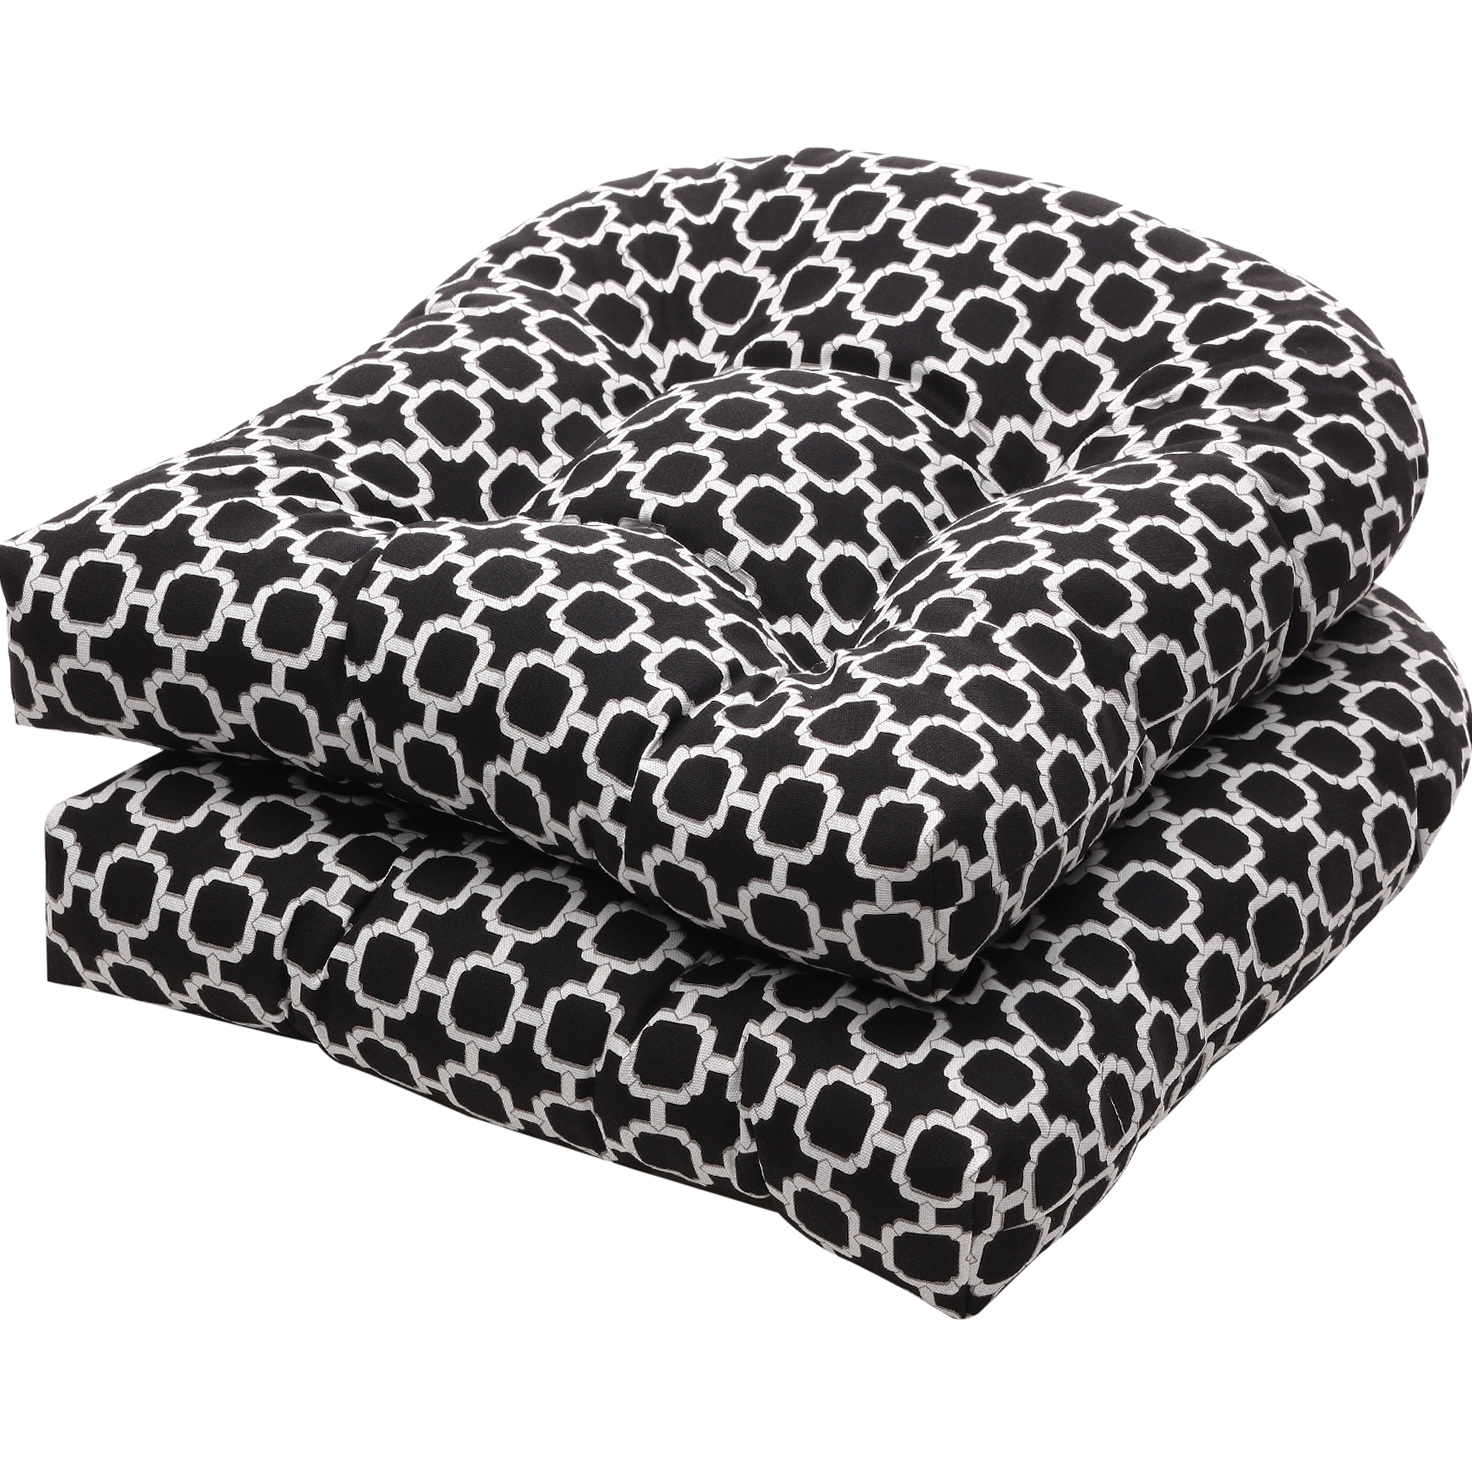 Wicker Chair Cushions On Sale Home Design Ideas